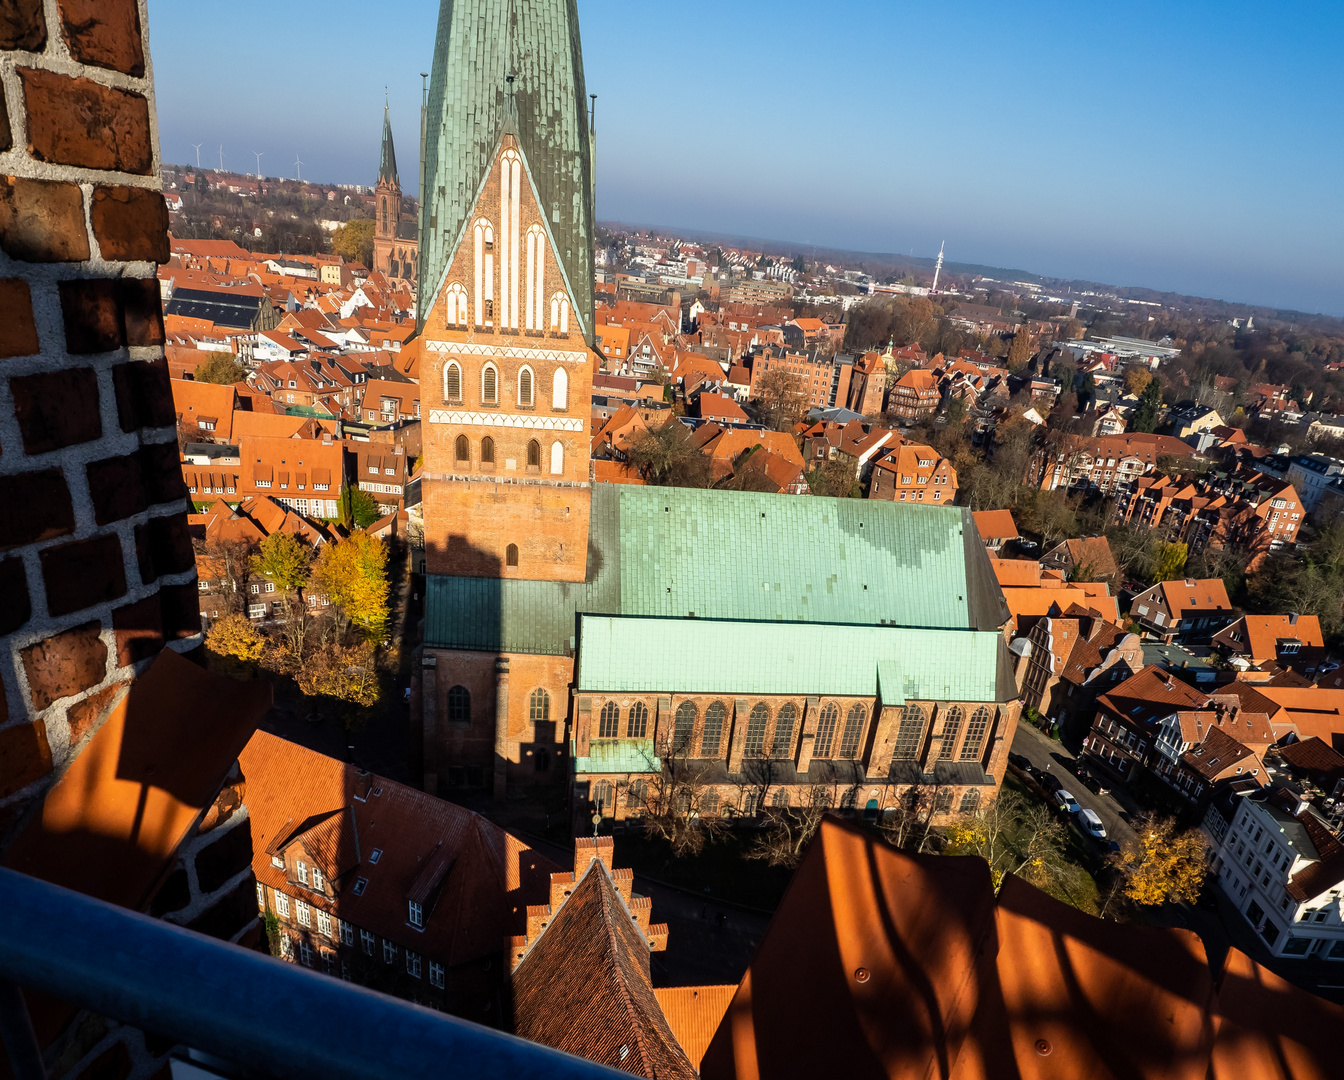 Blick über Lüneburgs  Dächer